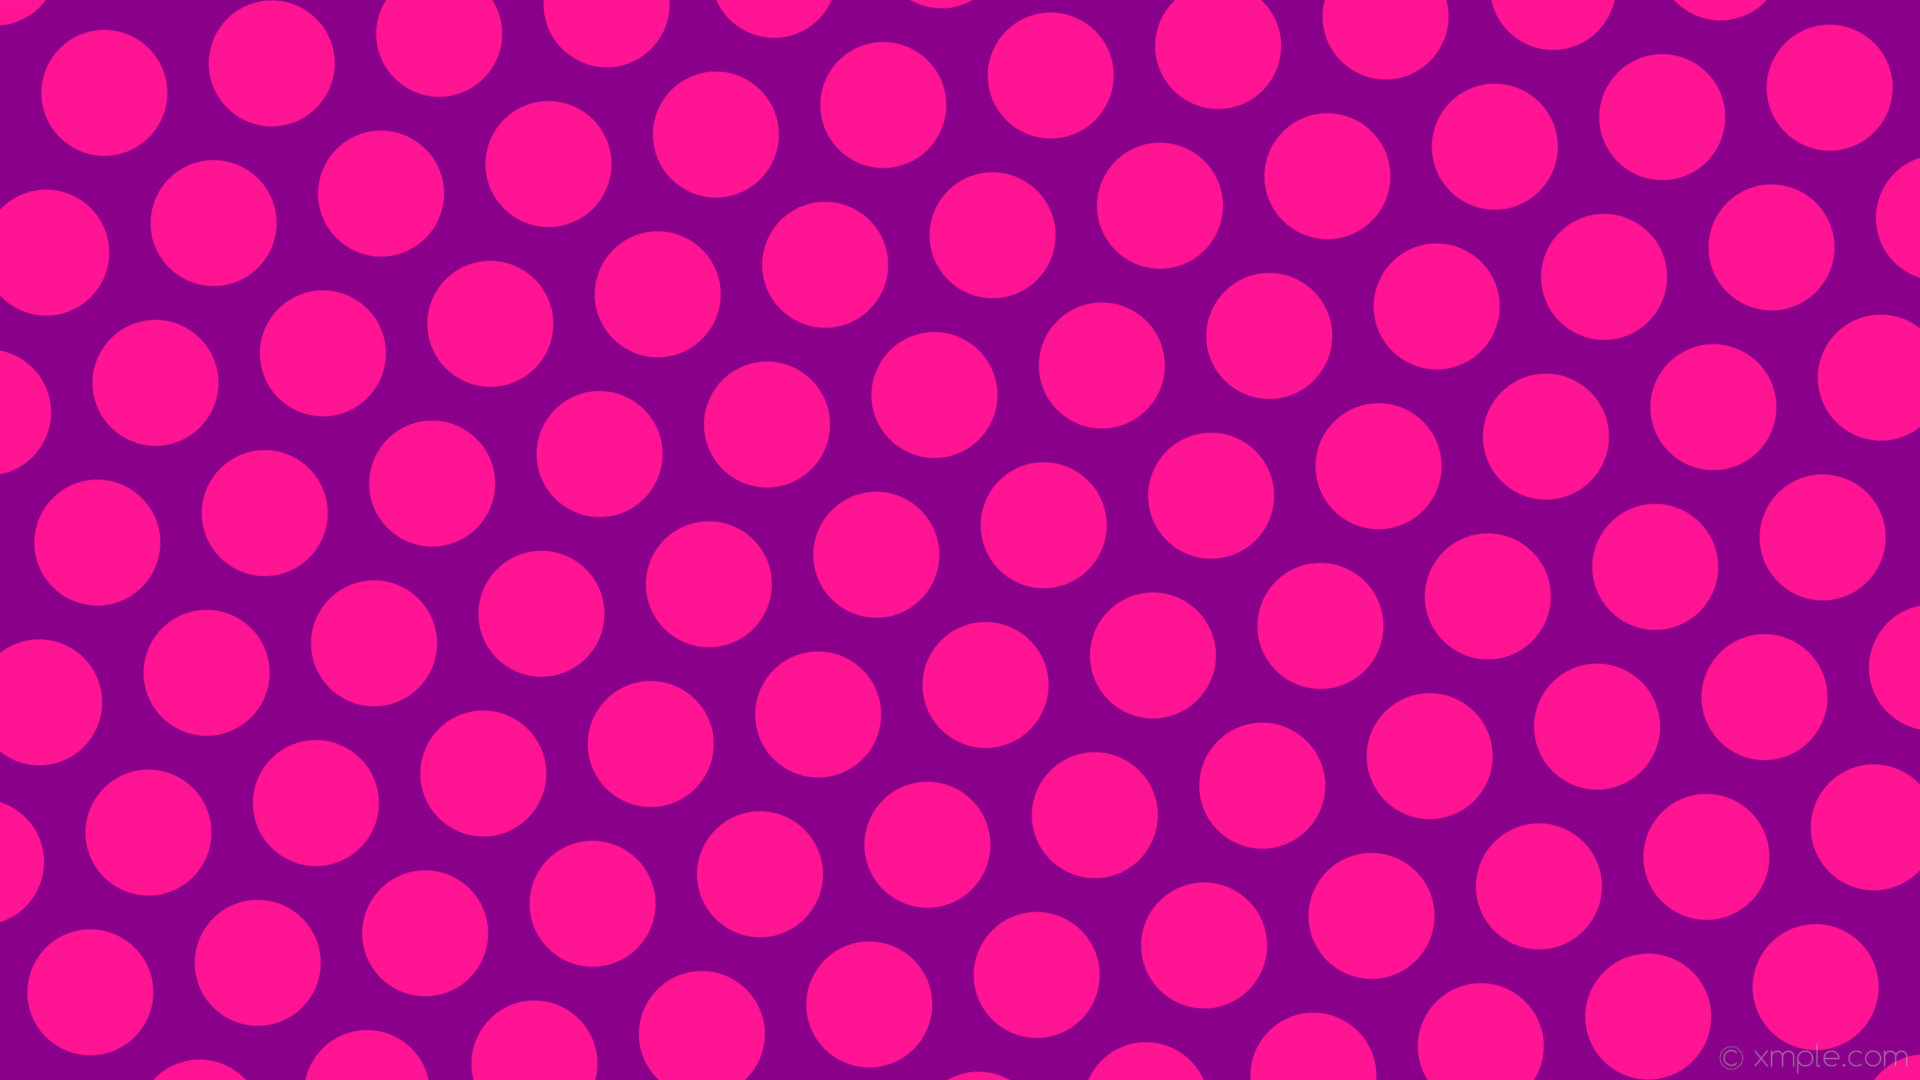 1920x1080 wallpaper purple polka pink hexagon dots dark magenta deep pink #8b008b  #ff1493 diagonal 10